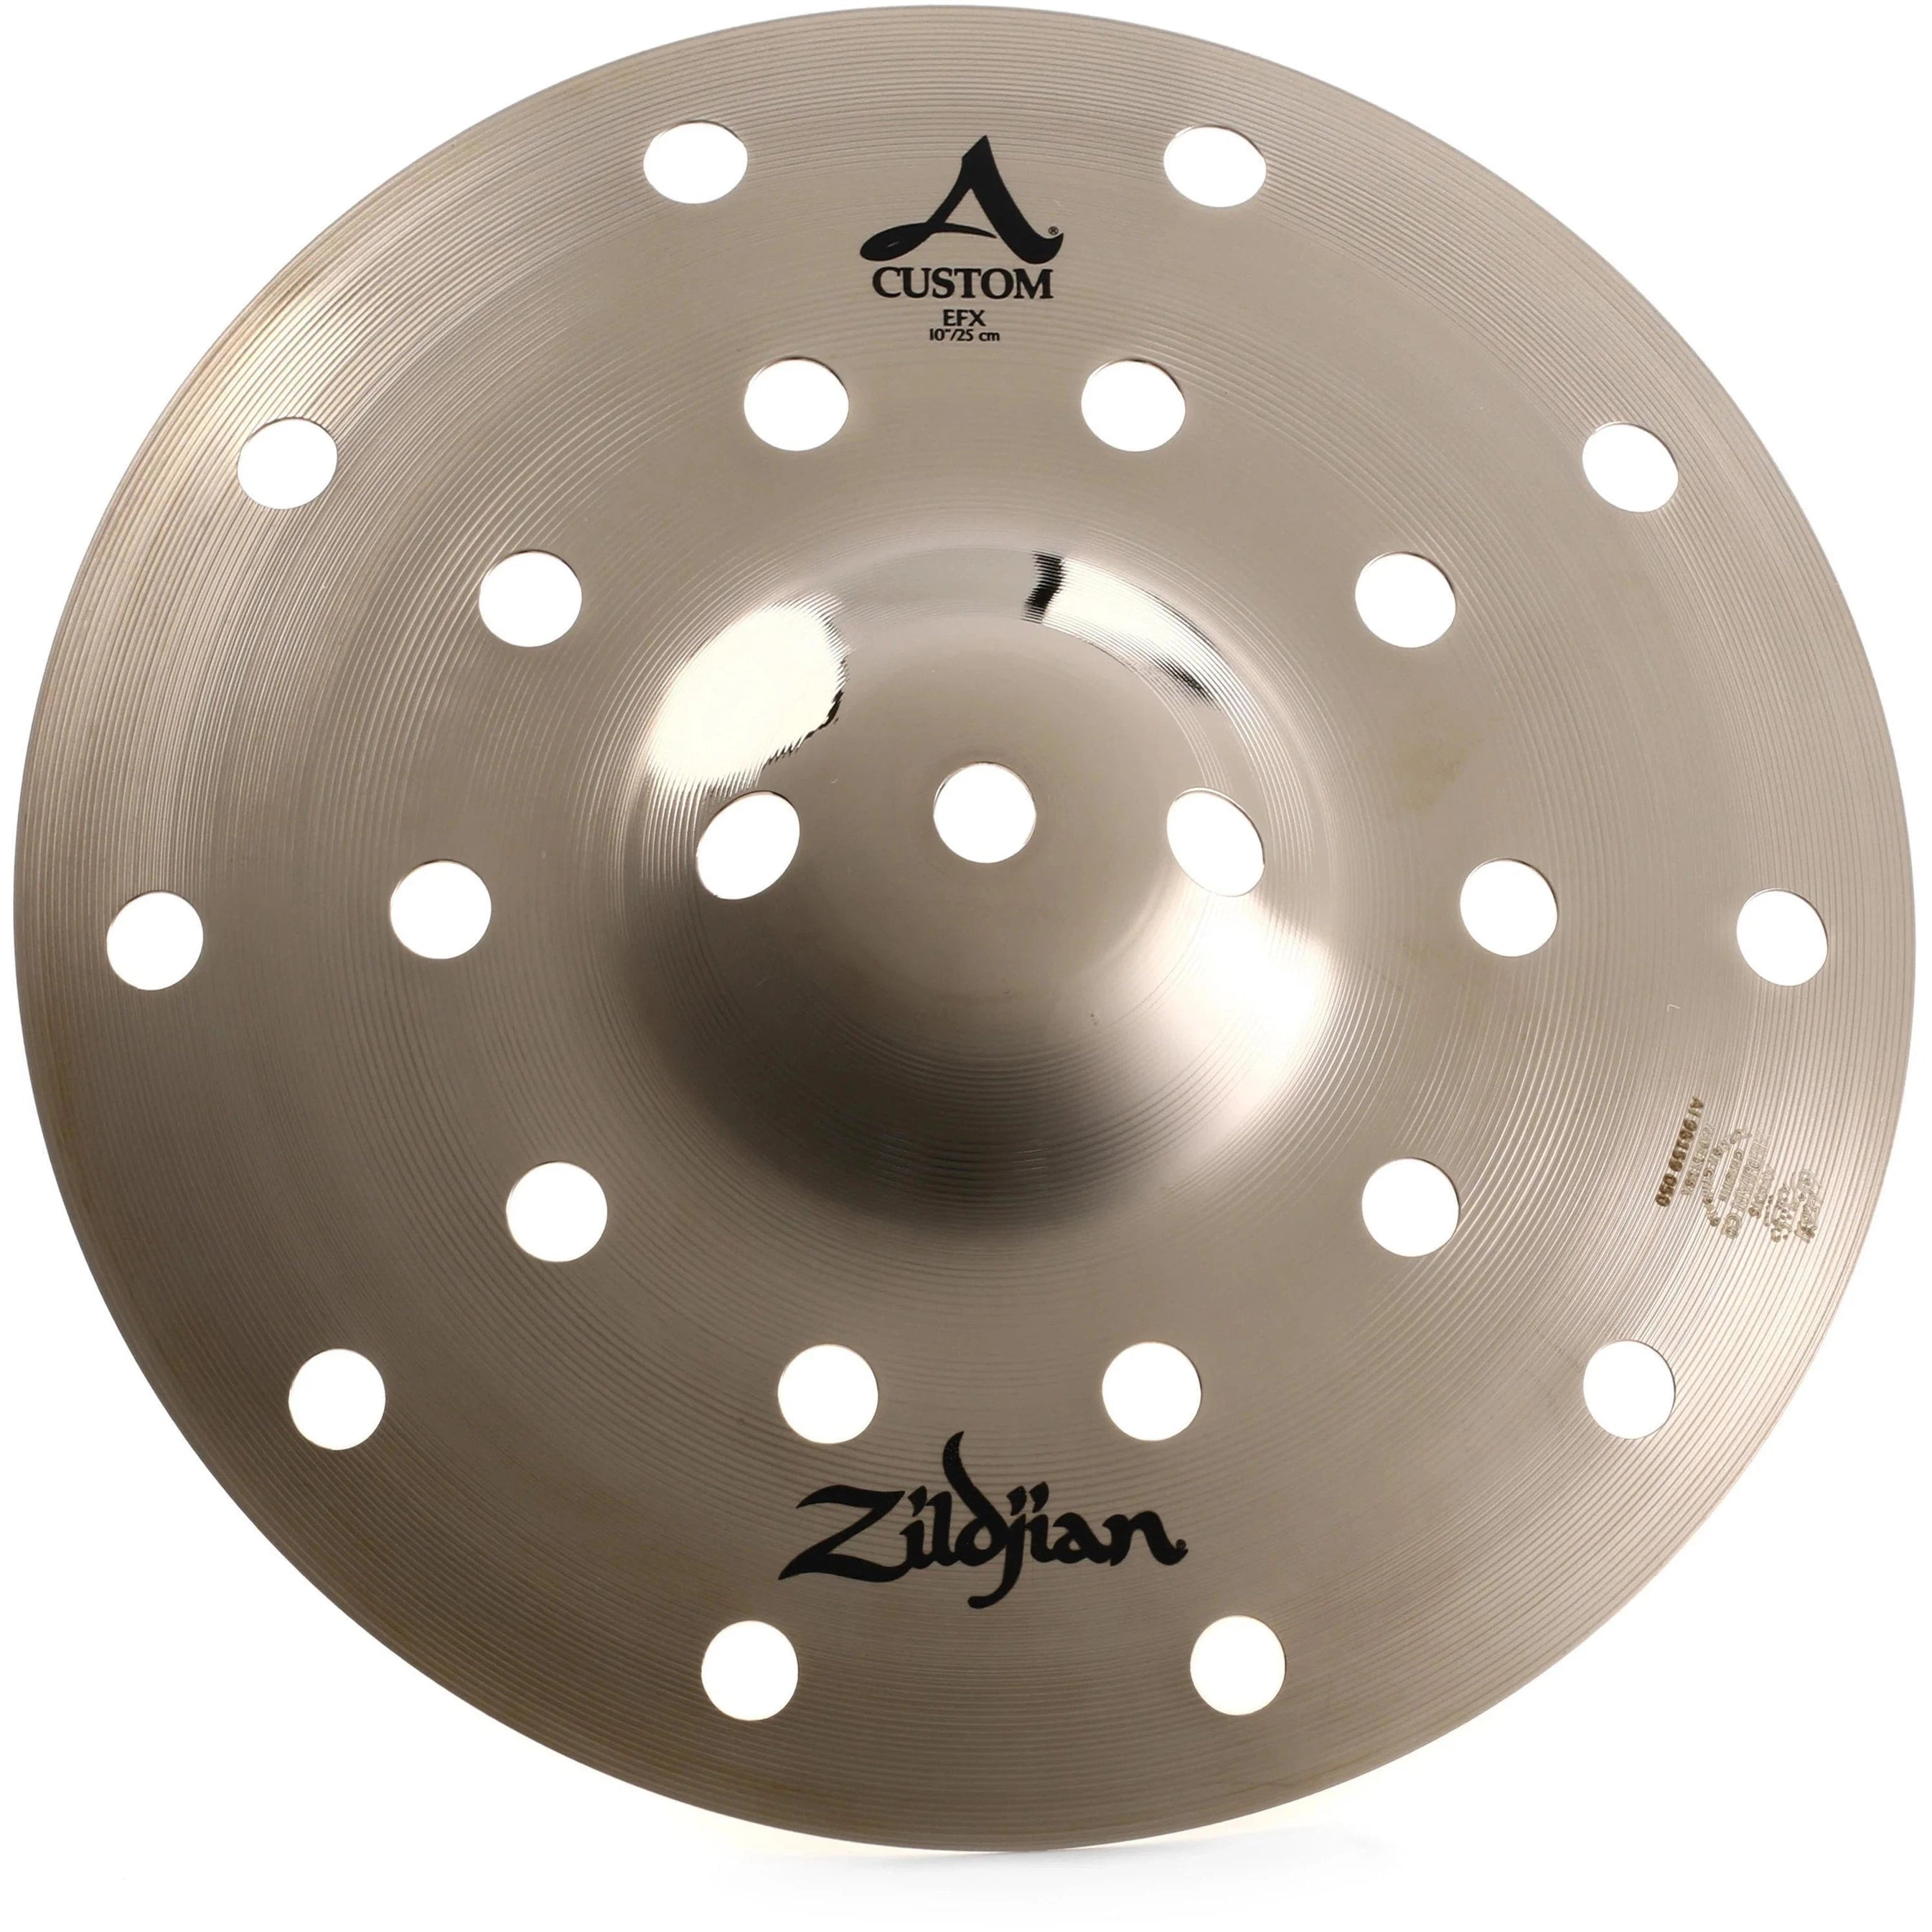 FX Cymbal Zildjian A Custom EFX-Mai Nguyên Music